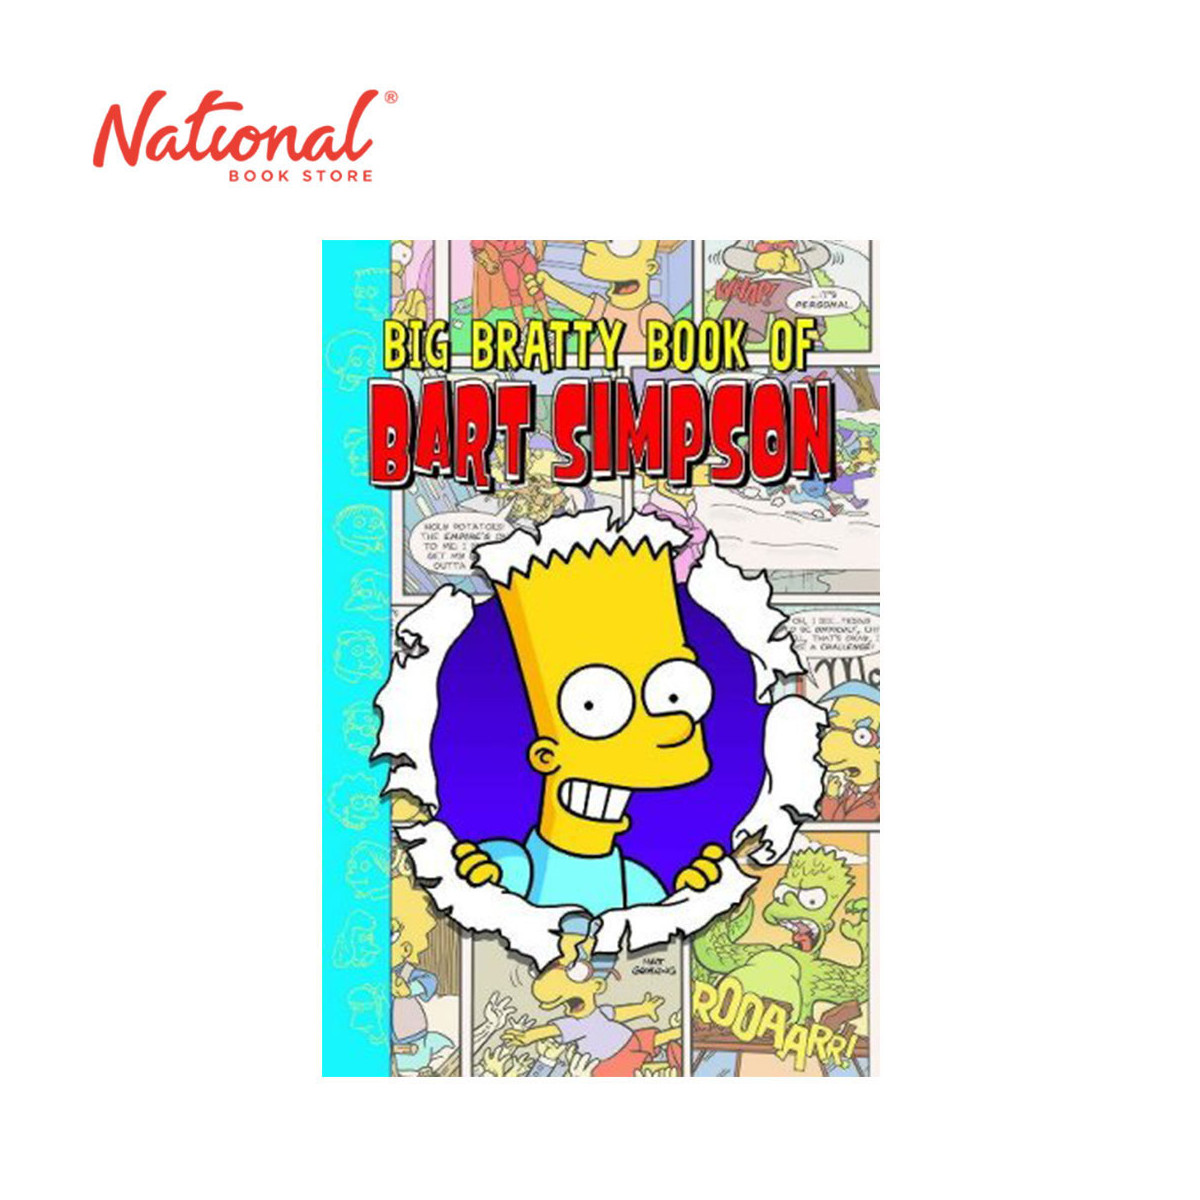 Simpsons Comics: Big Bratty Book Of Bart Simpson by Matt Groening - Trade Paperback - Graphic Novels